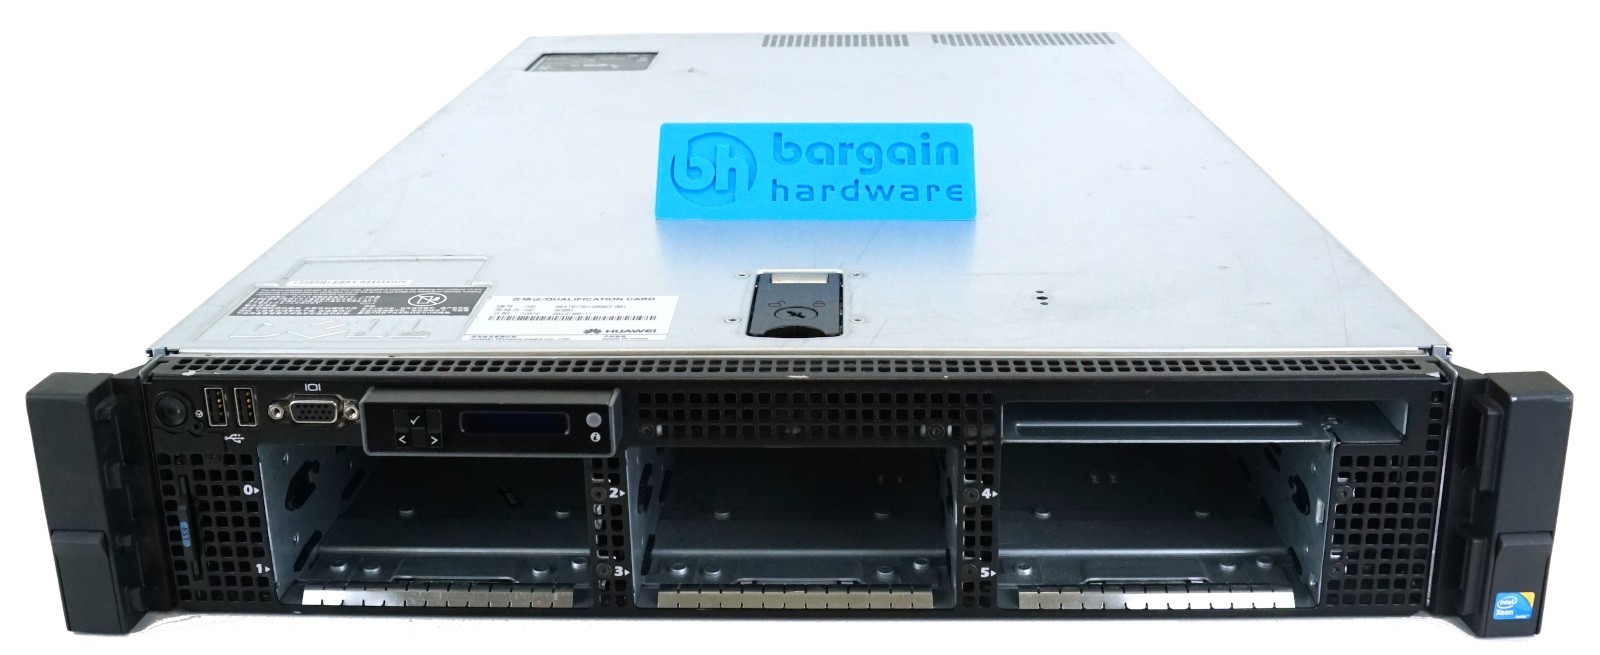 Dell PowerEdge R710 6-Bay 2U Rackmount Server | Configure-to-Order